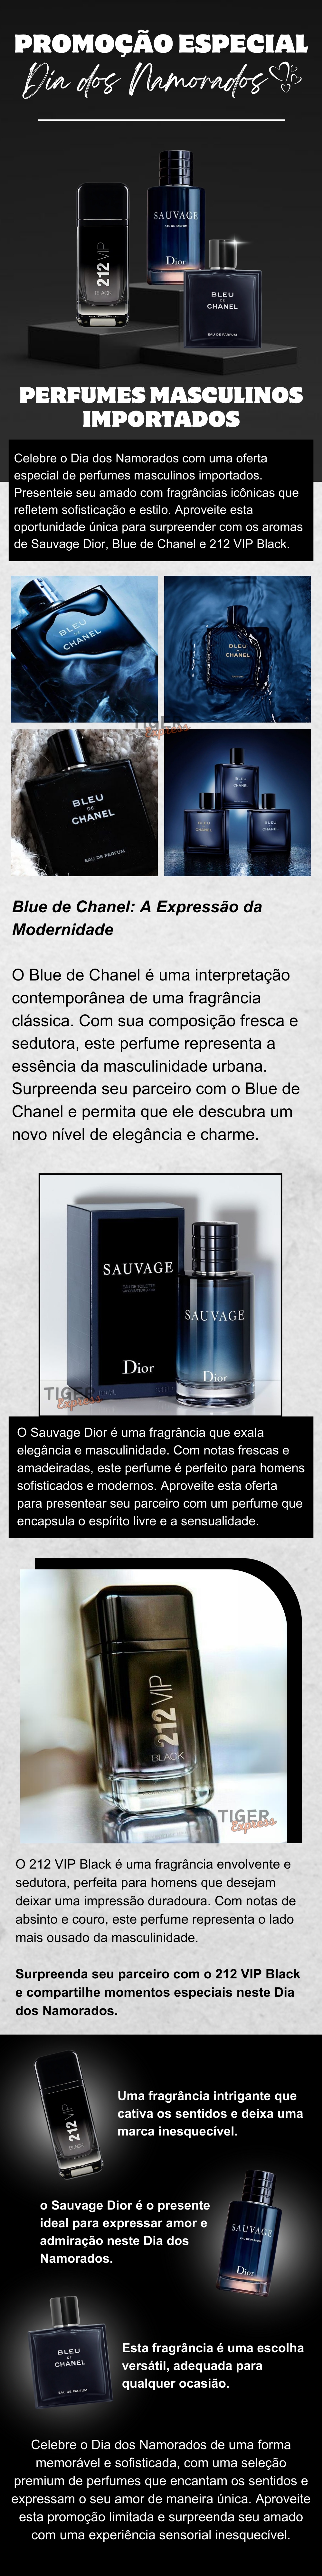 [COMPRE 1 LEVE 3] Perfumes Masculinos Importados - Sauvage Dior l Bleu de Chanel l 212 VIP Black - ESPECIAL DIA DOS NAMORADOS